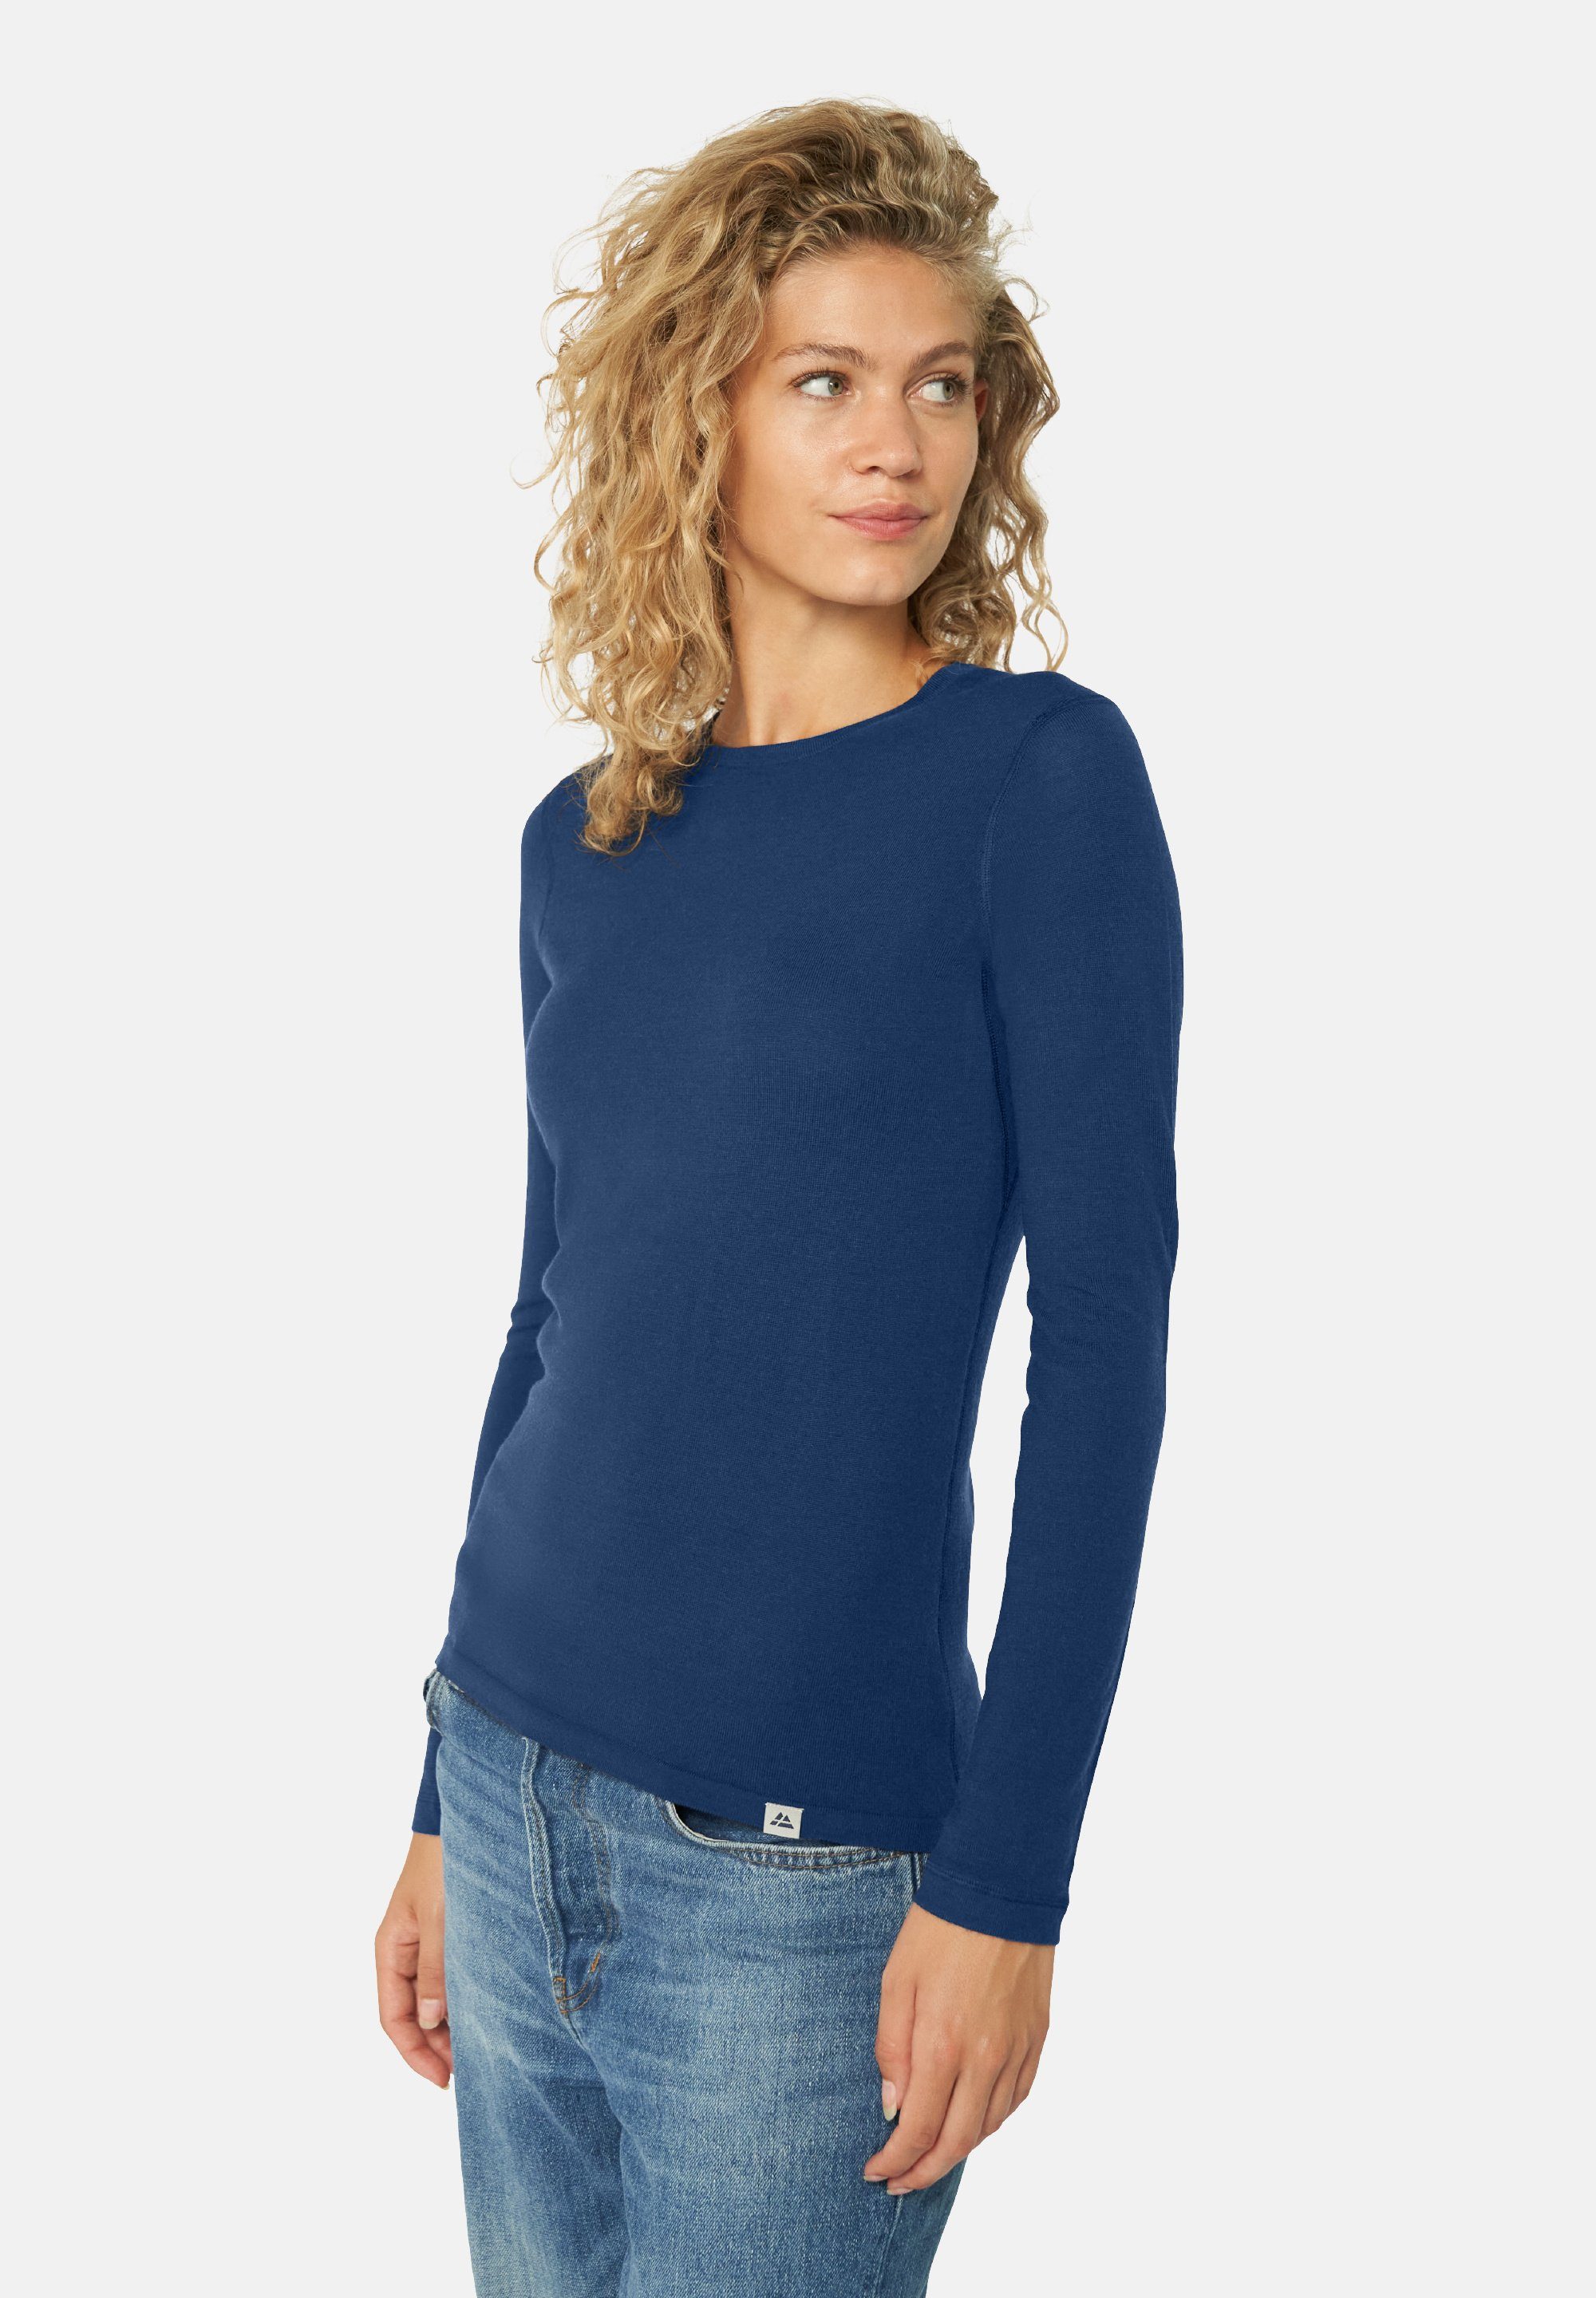 Temperaturregulierend ENDURANCE Damen DANISH Funktionsshirt Thermounterhemd Merino blue